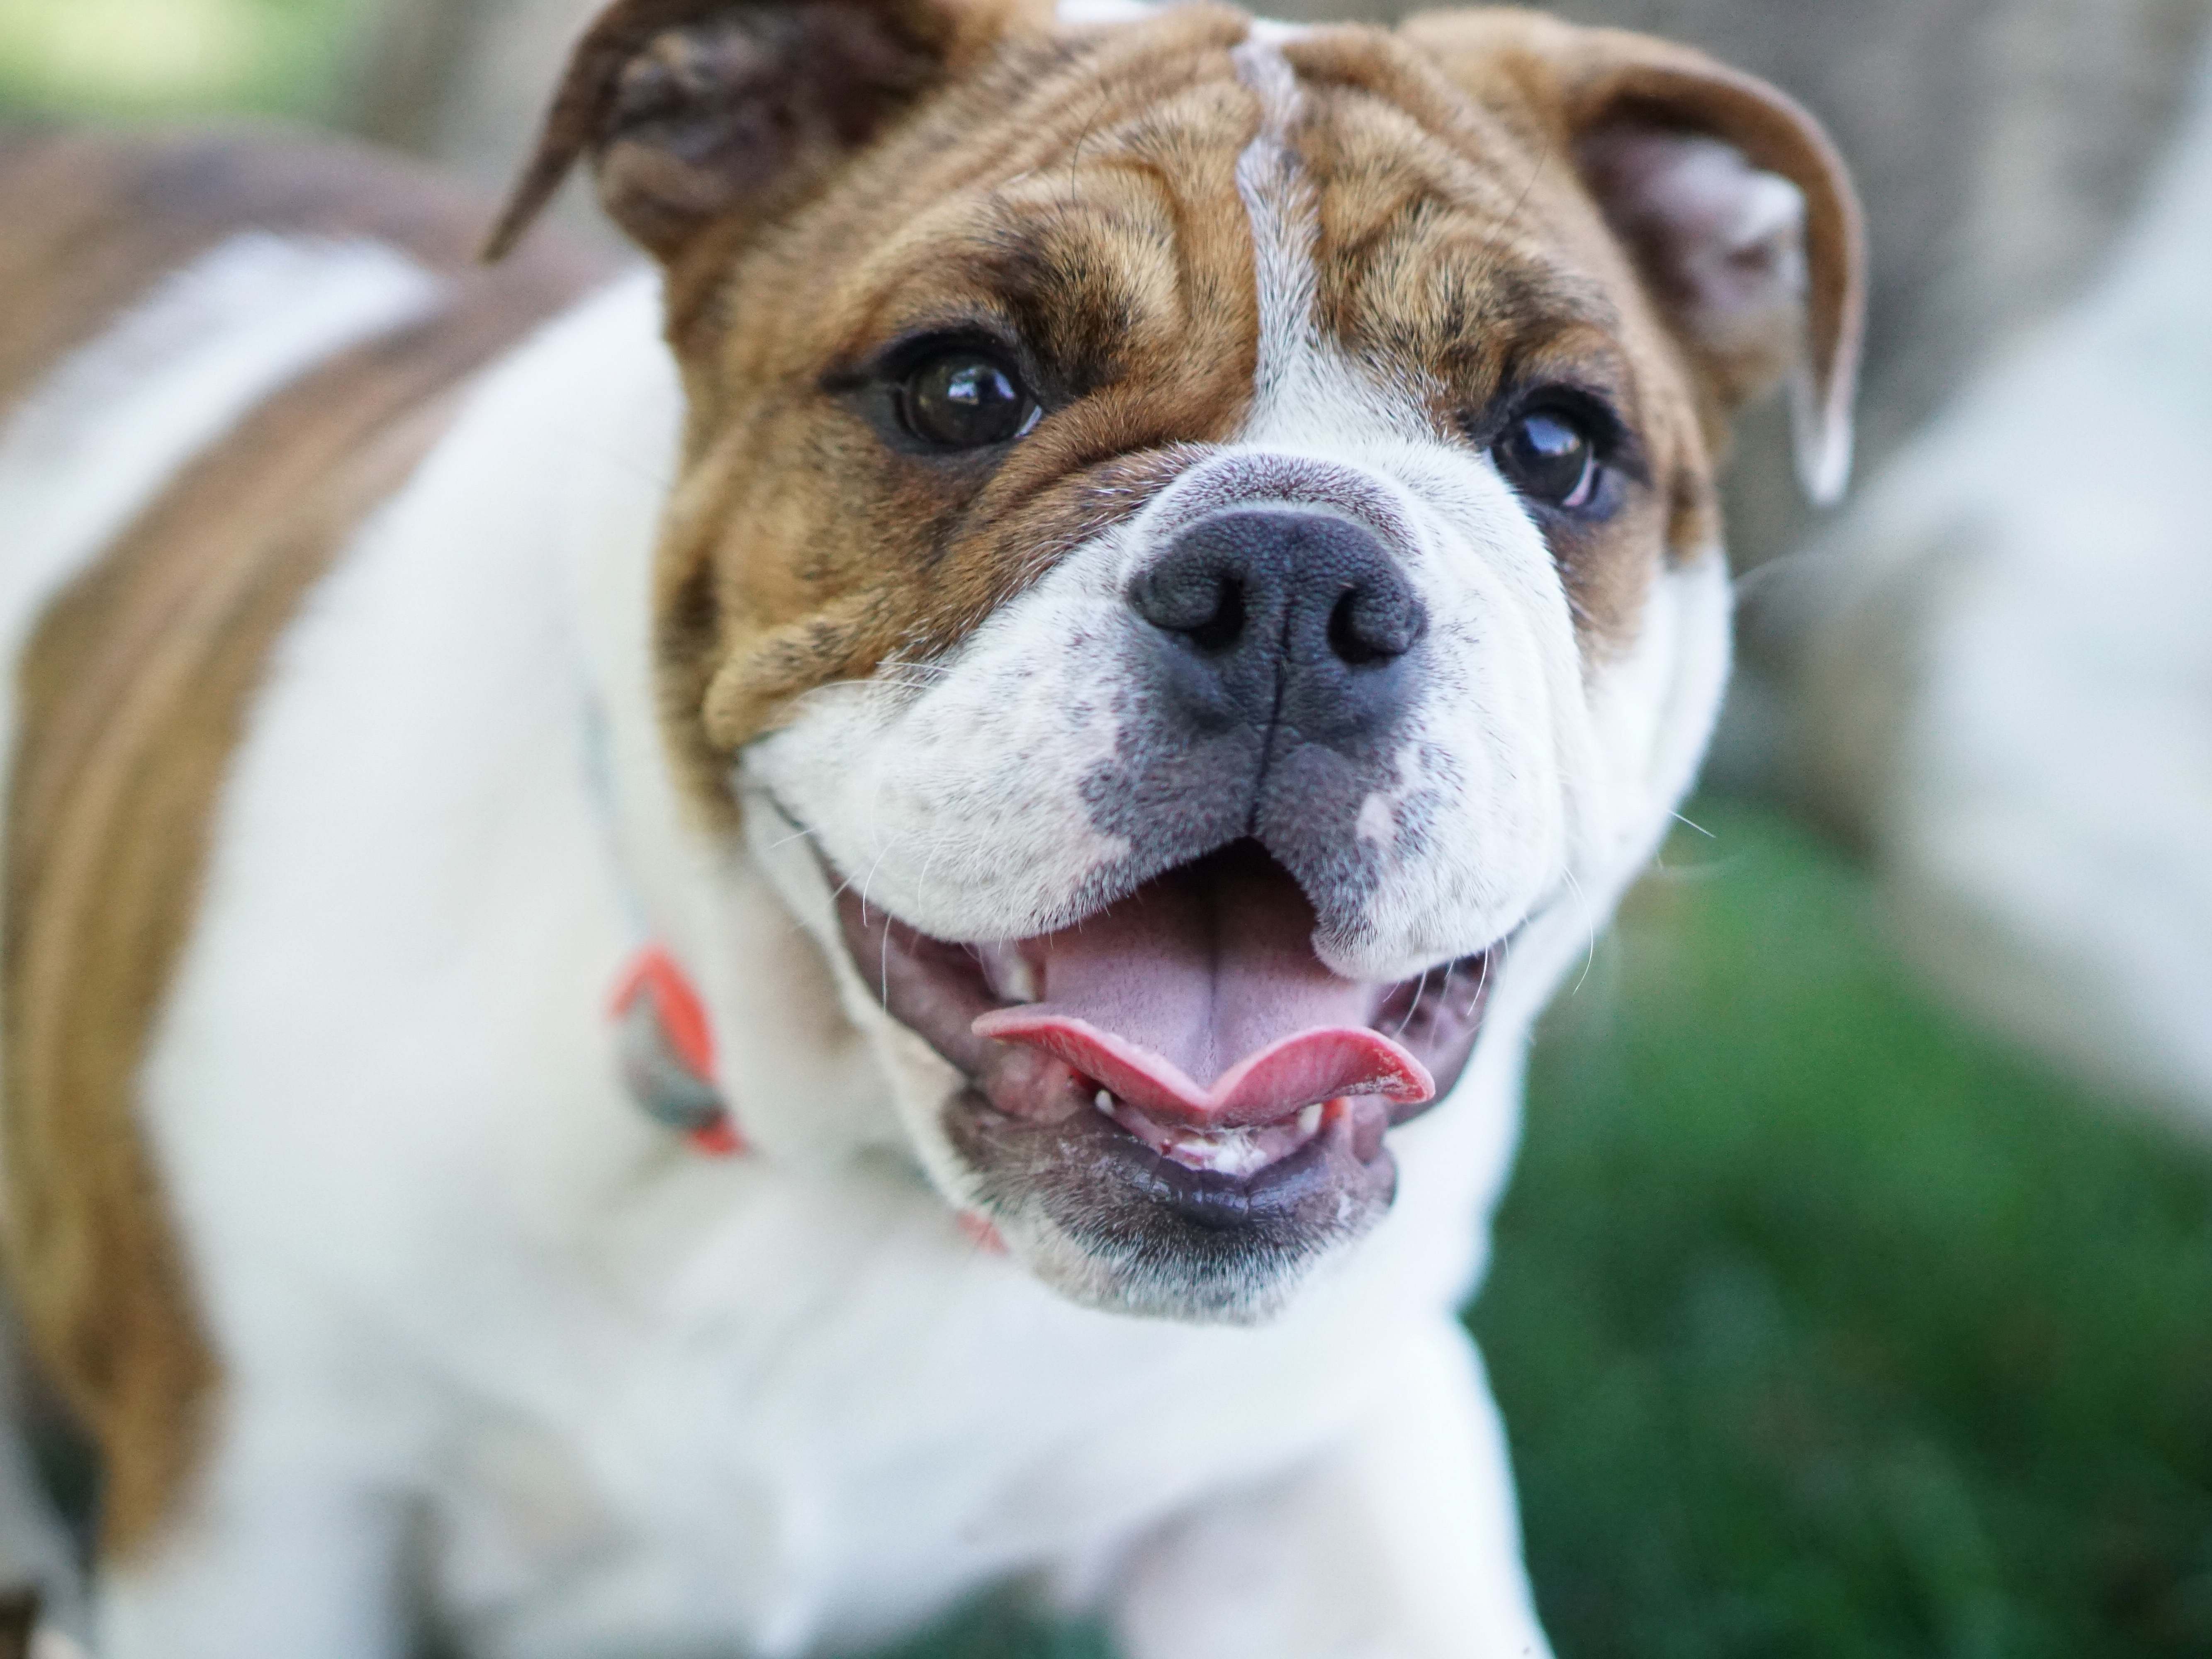 Bulldog Short-coated Brown And White Dog Pet Image Free Photo